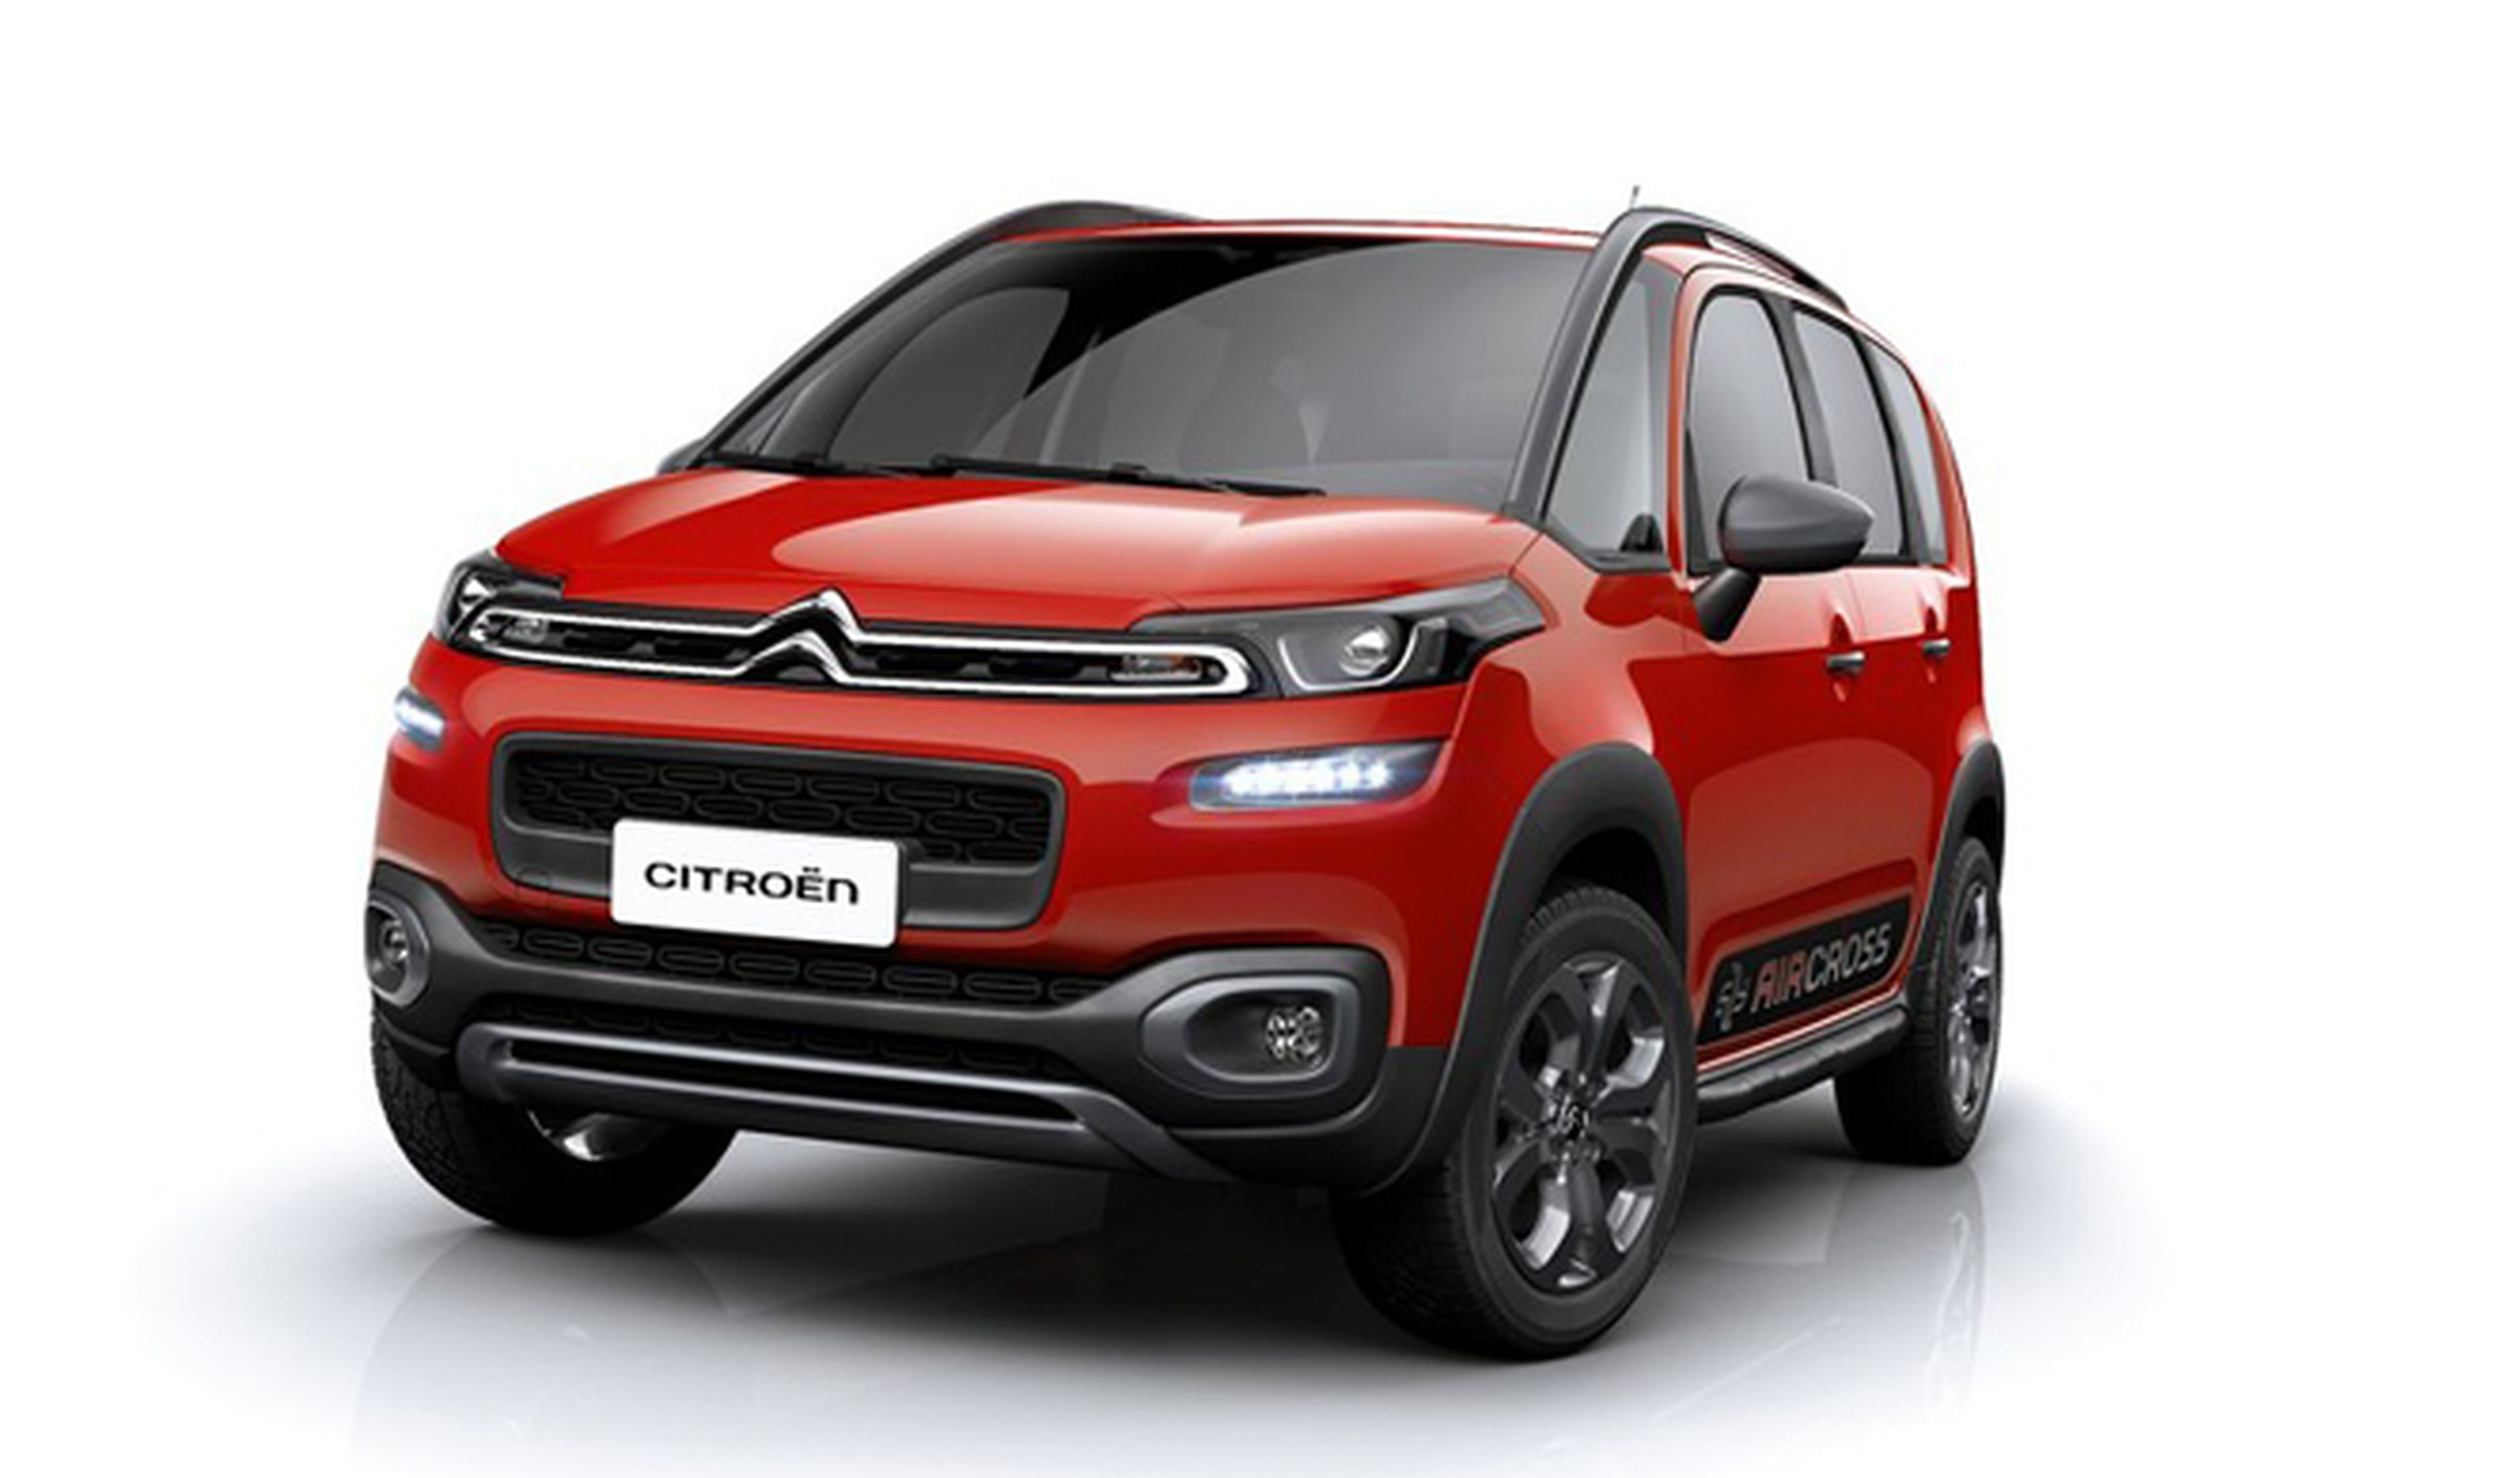 El extraño modelo que Citroën va a lanzar en Latinoamérica